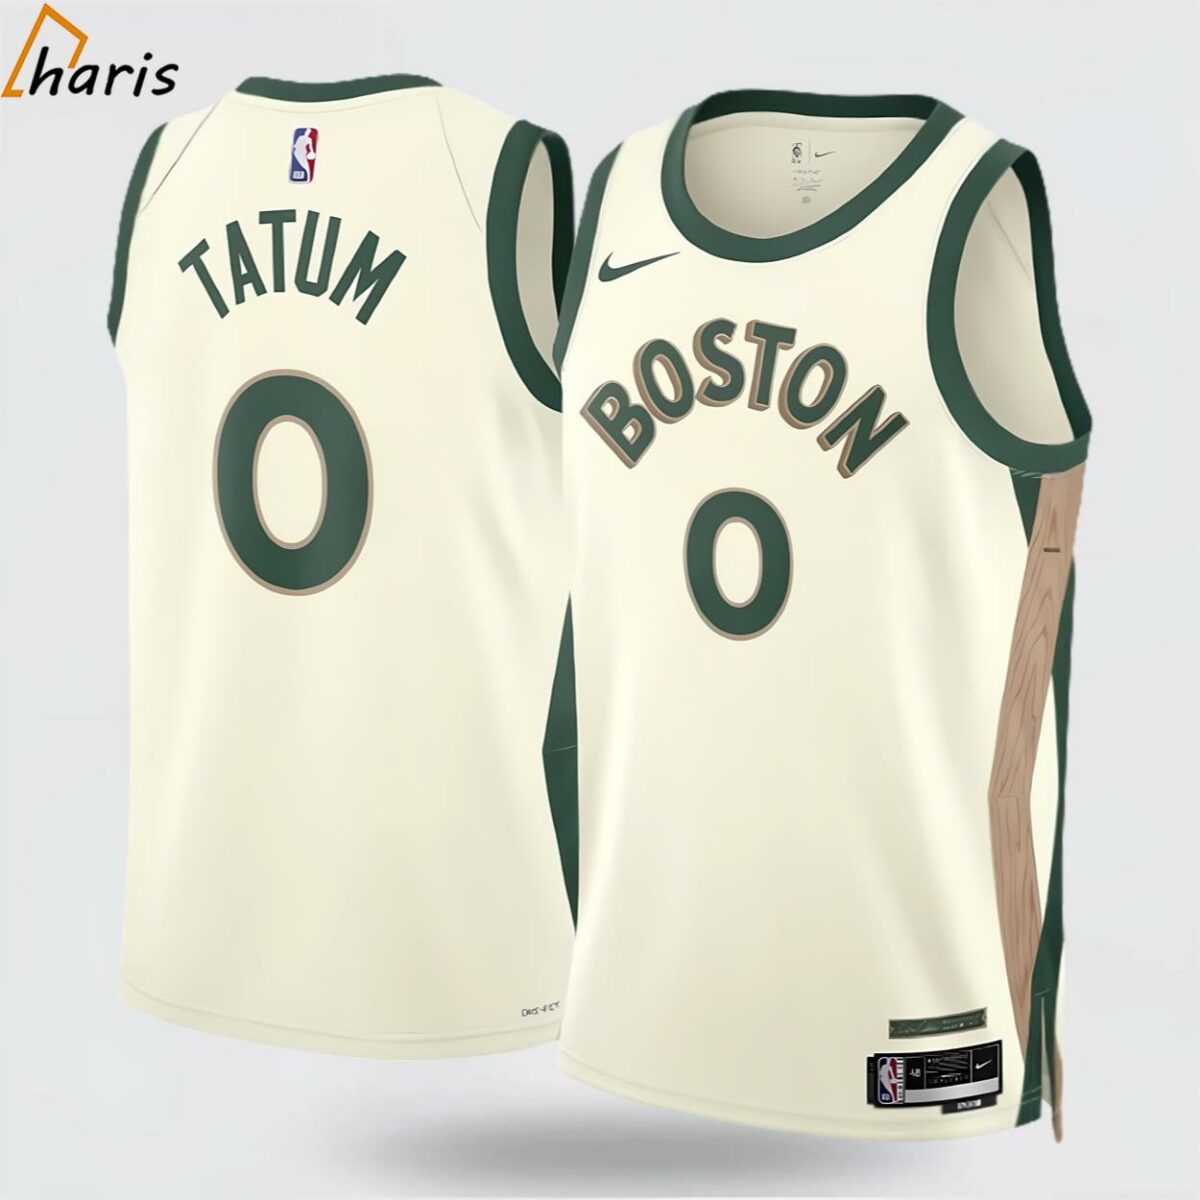 Jayson Tatum Mens Nike NBA Boston Celtics Jersey 1 jersey